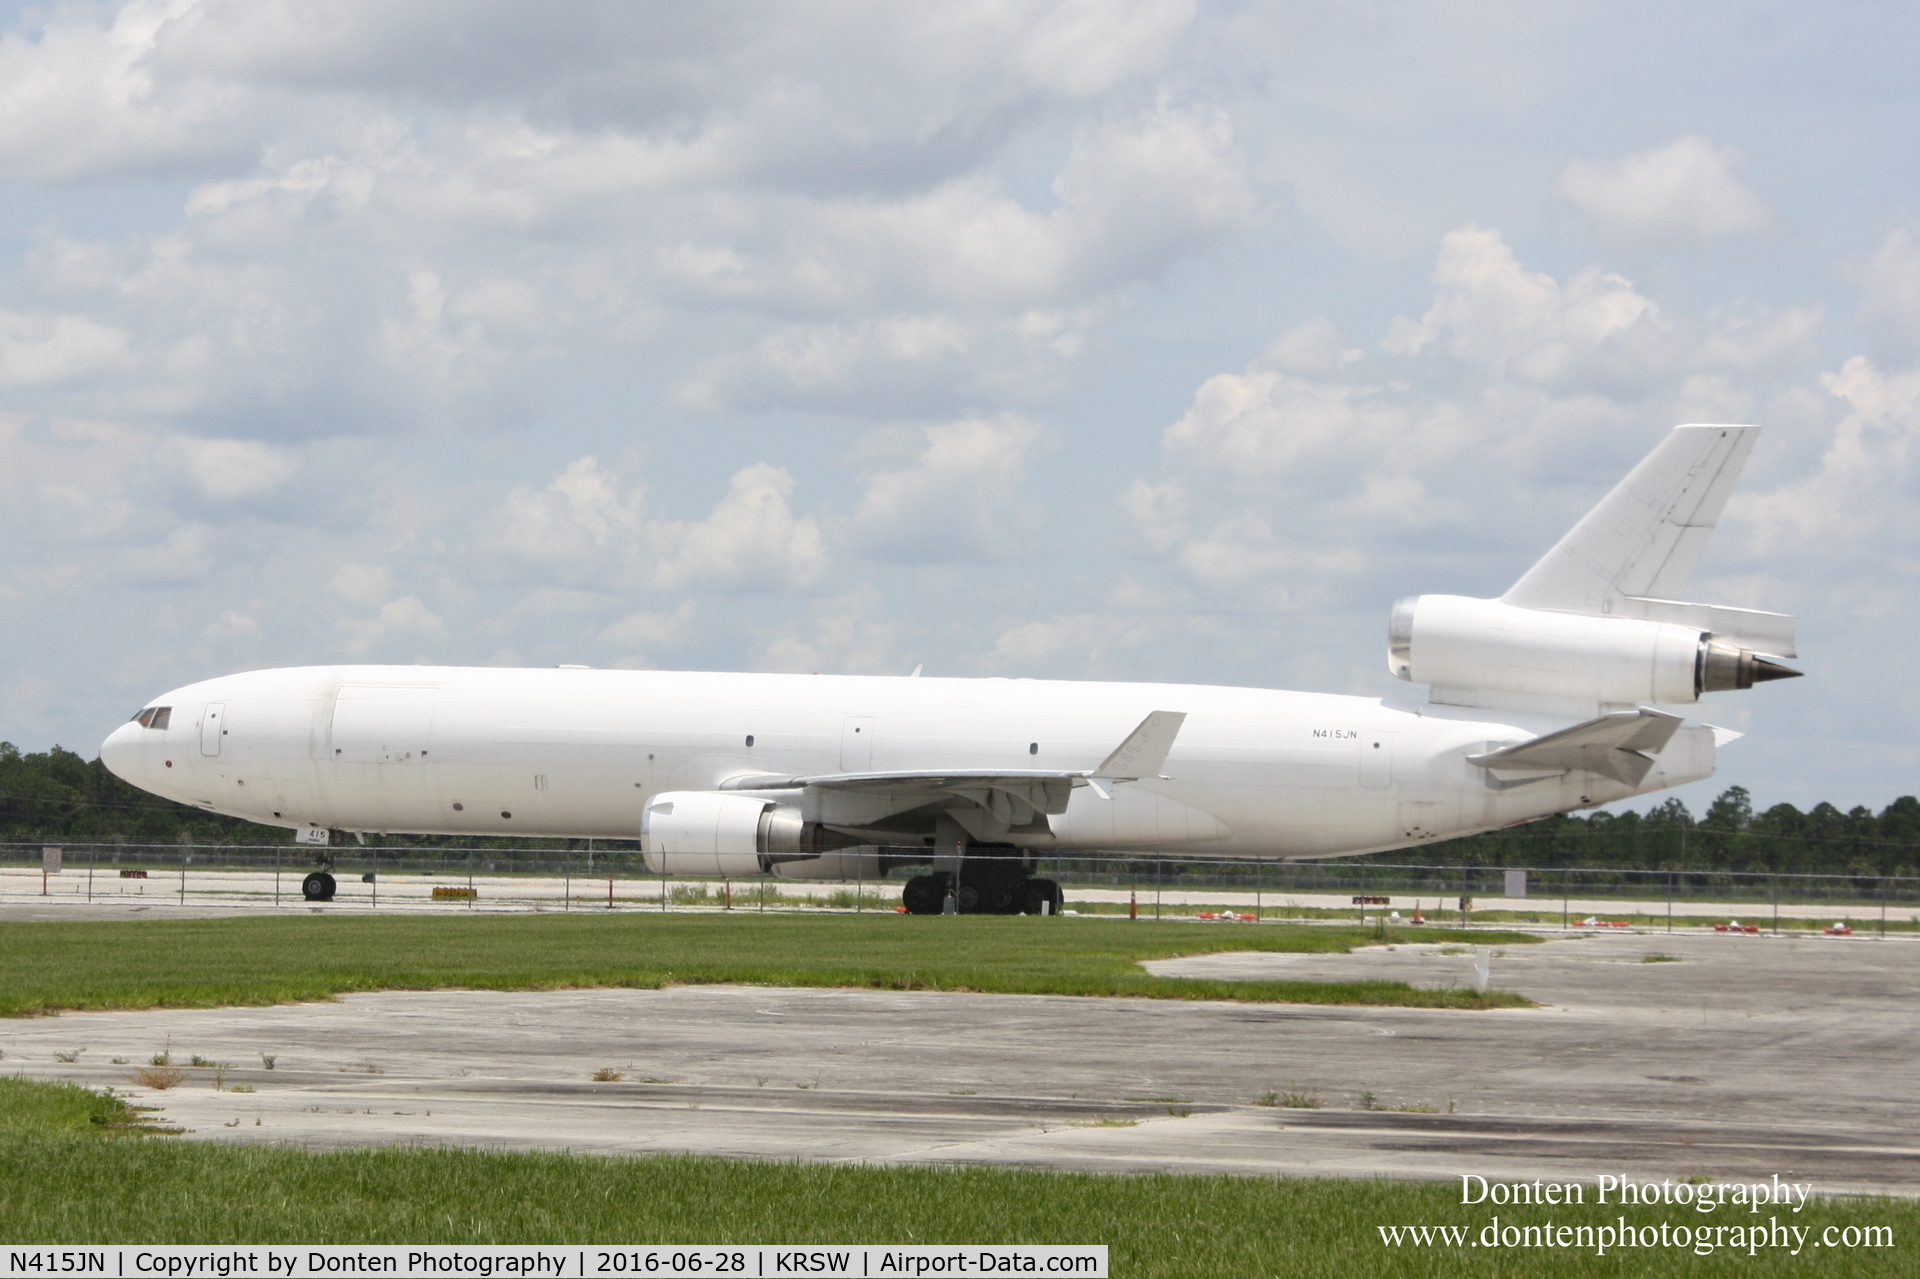 N415JN, 1994 McDonnell Douglas MD-11F C/N 48415, McDonnell Douglas MD-11 (N415JN) sits on the ramp at Southwest Florida International Airport